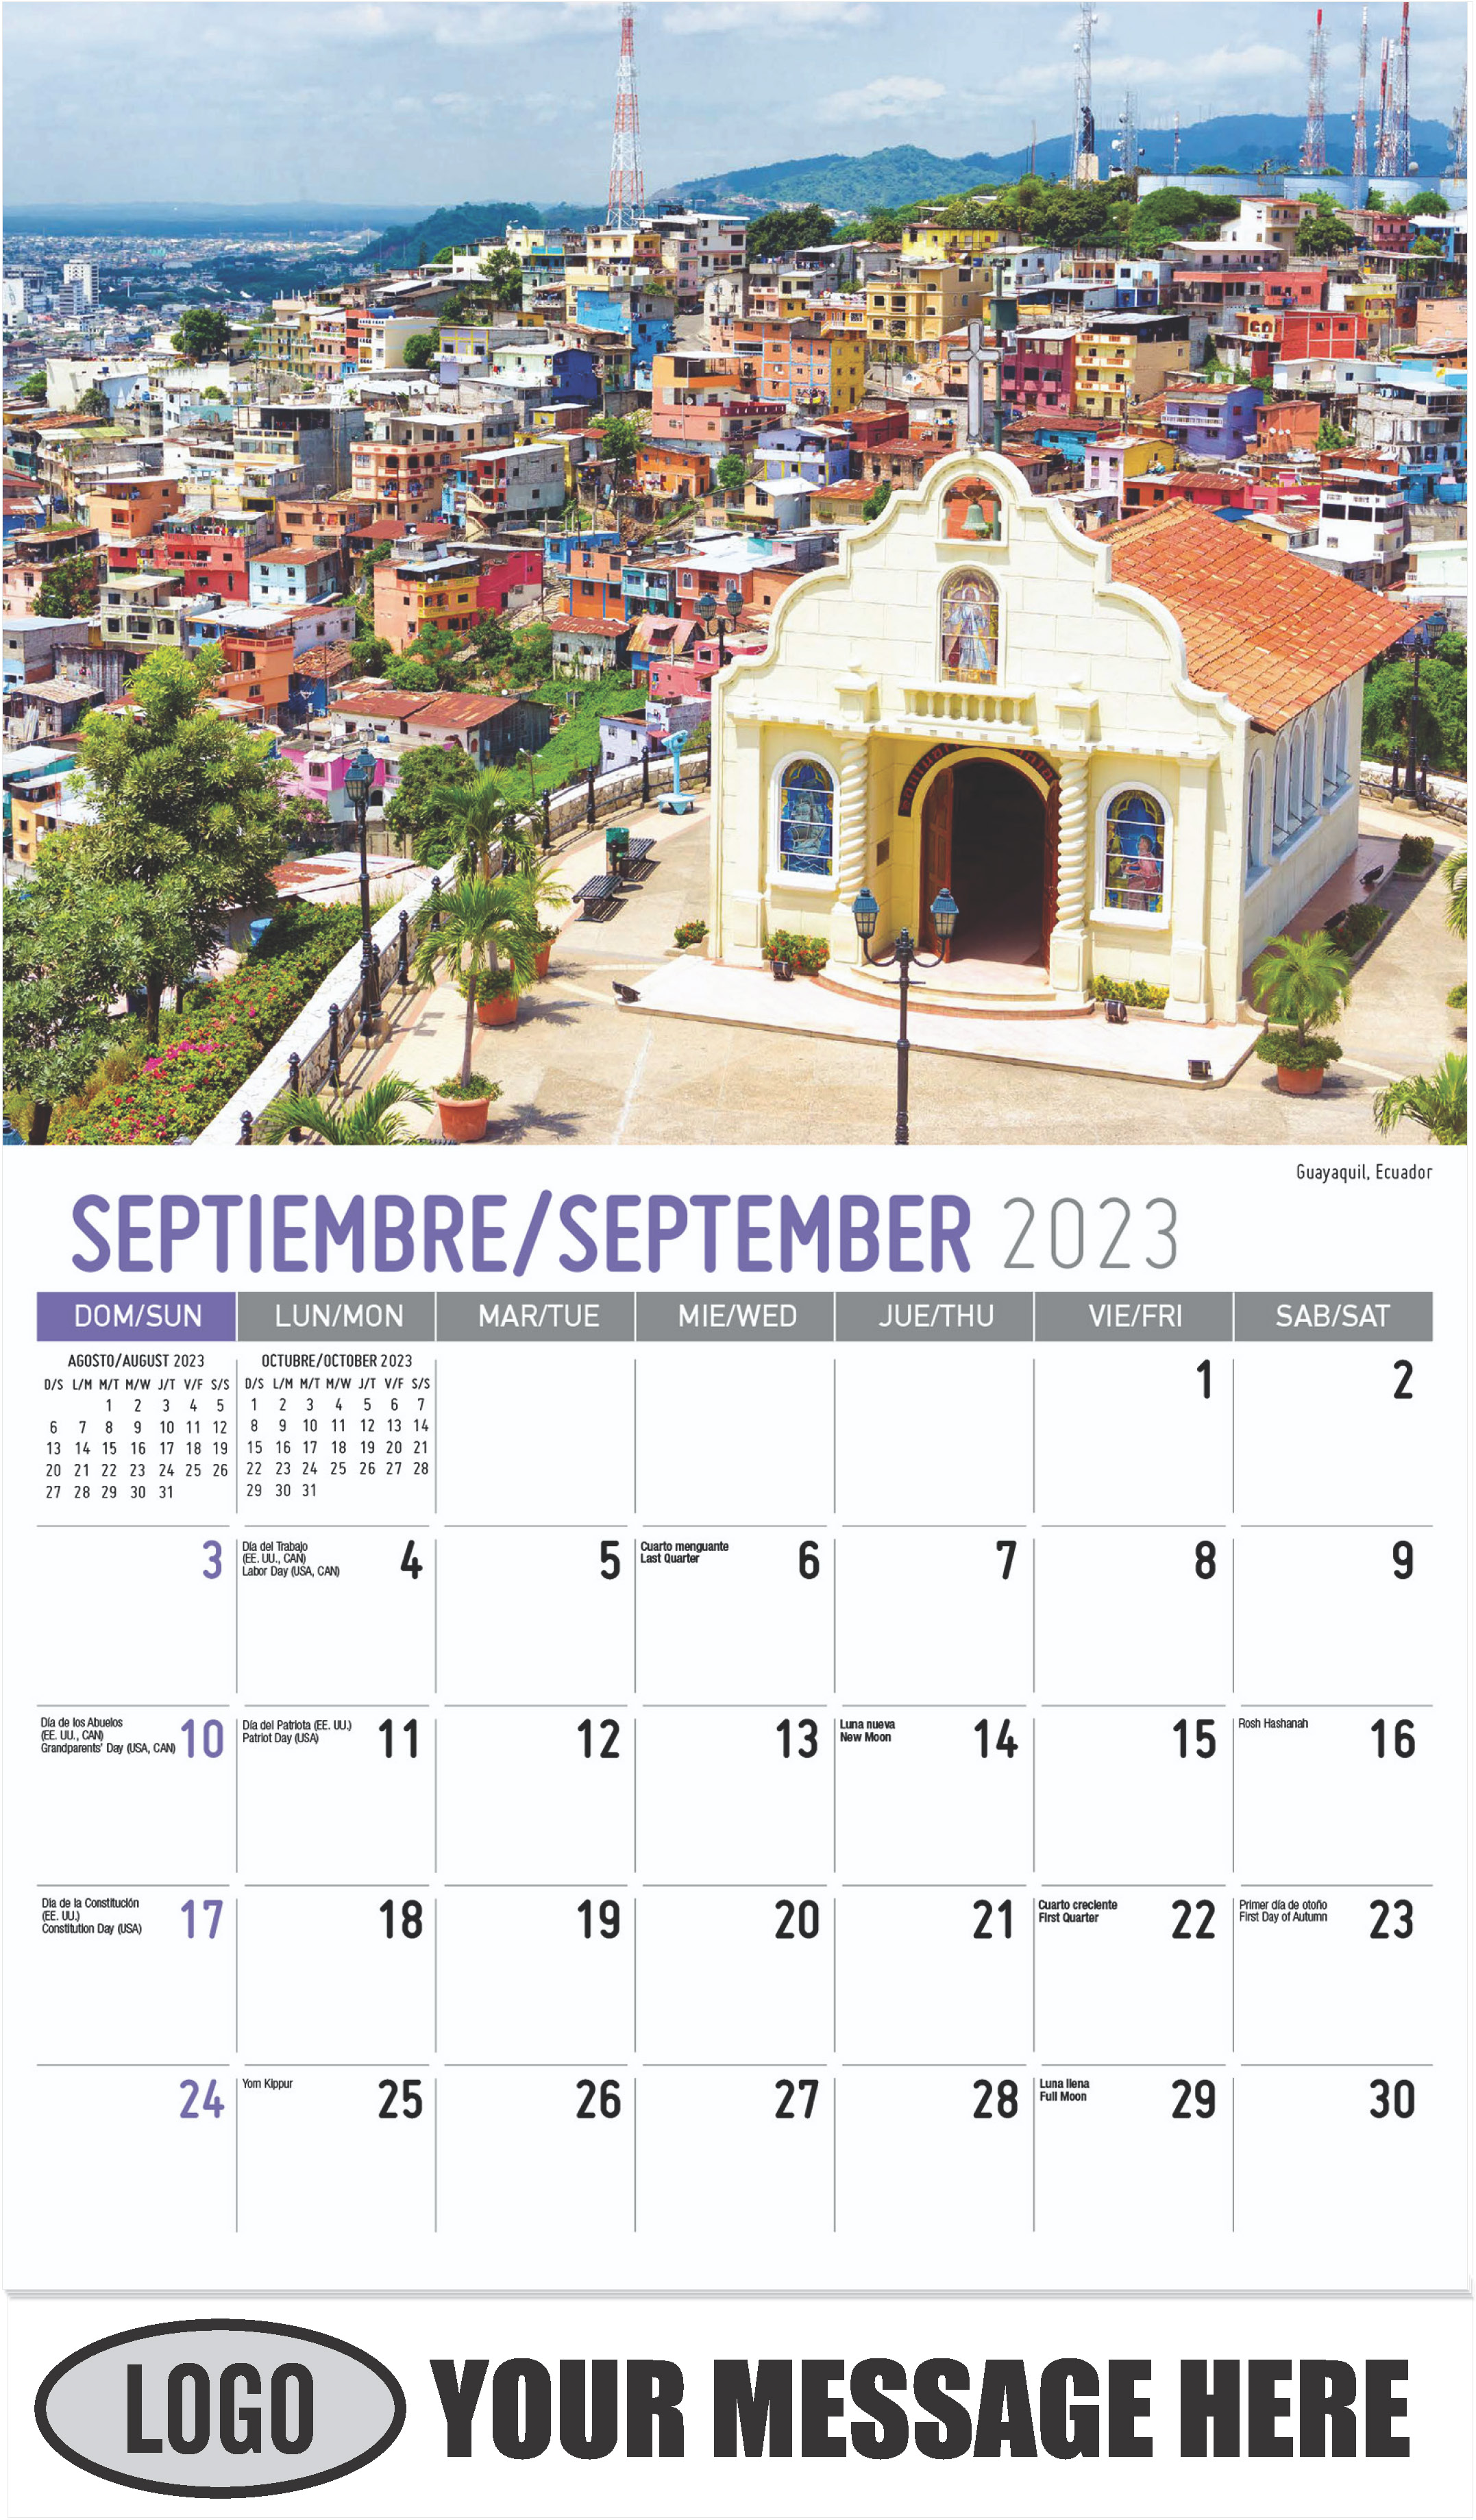 Guayaquil, Equador - September - Beauty of Latin America 2023 Promotional Calendar